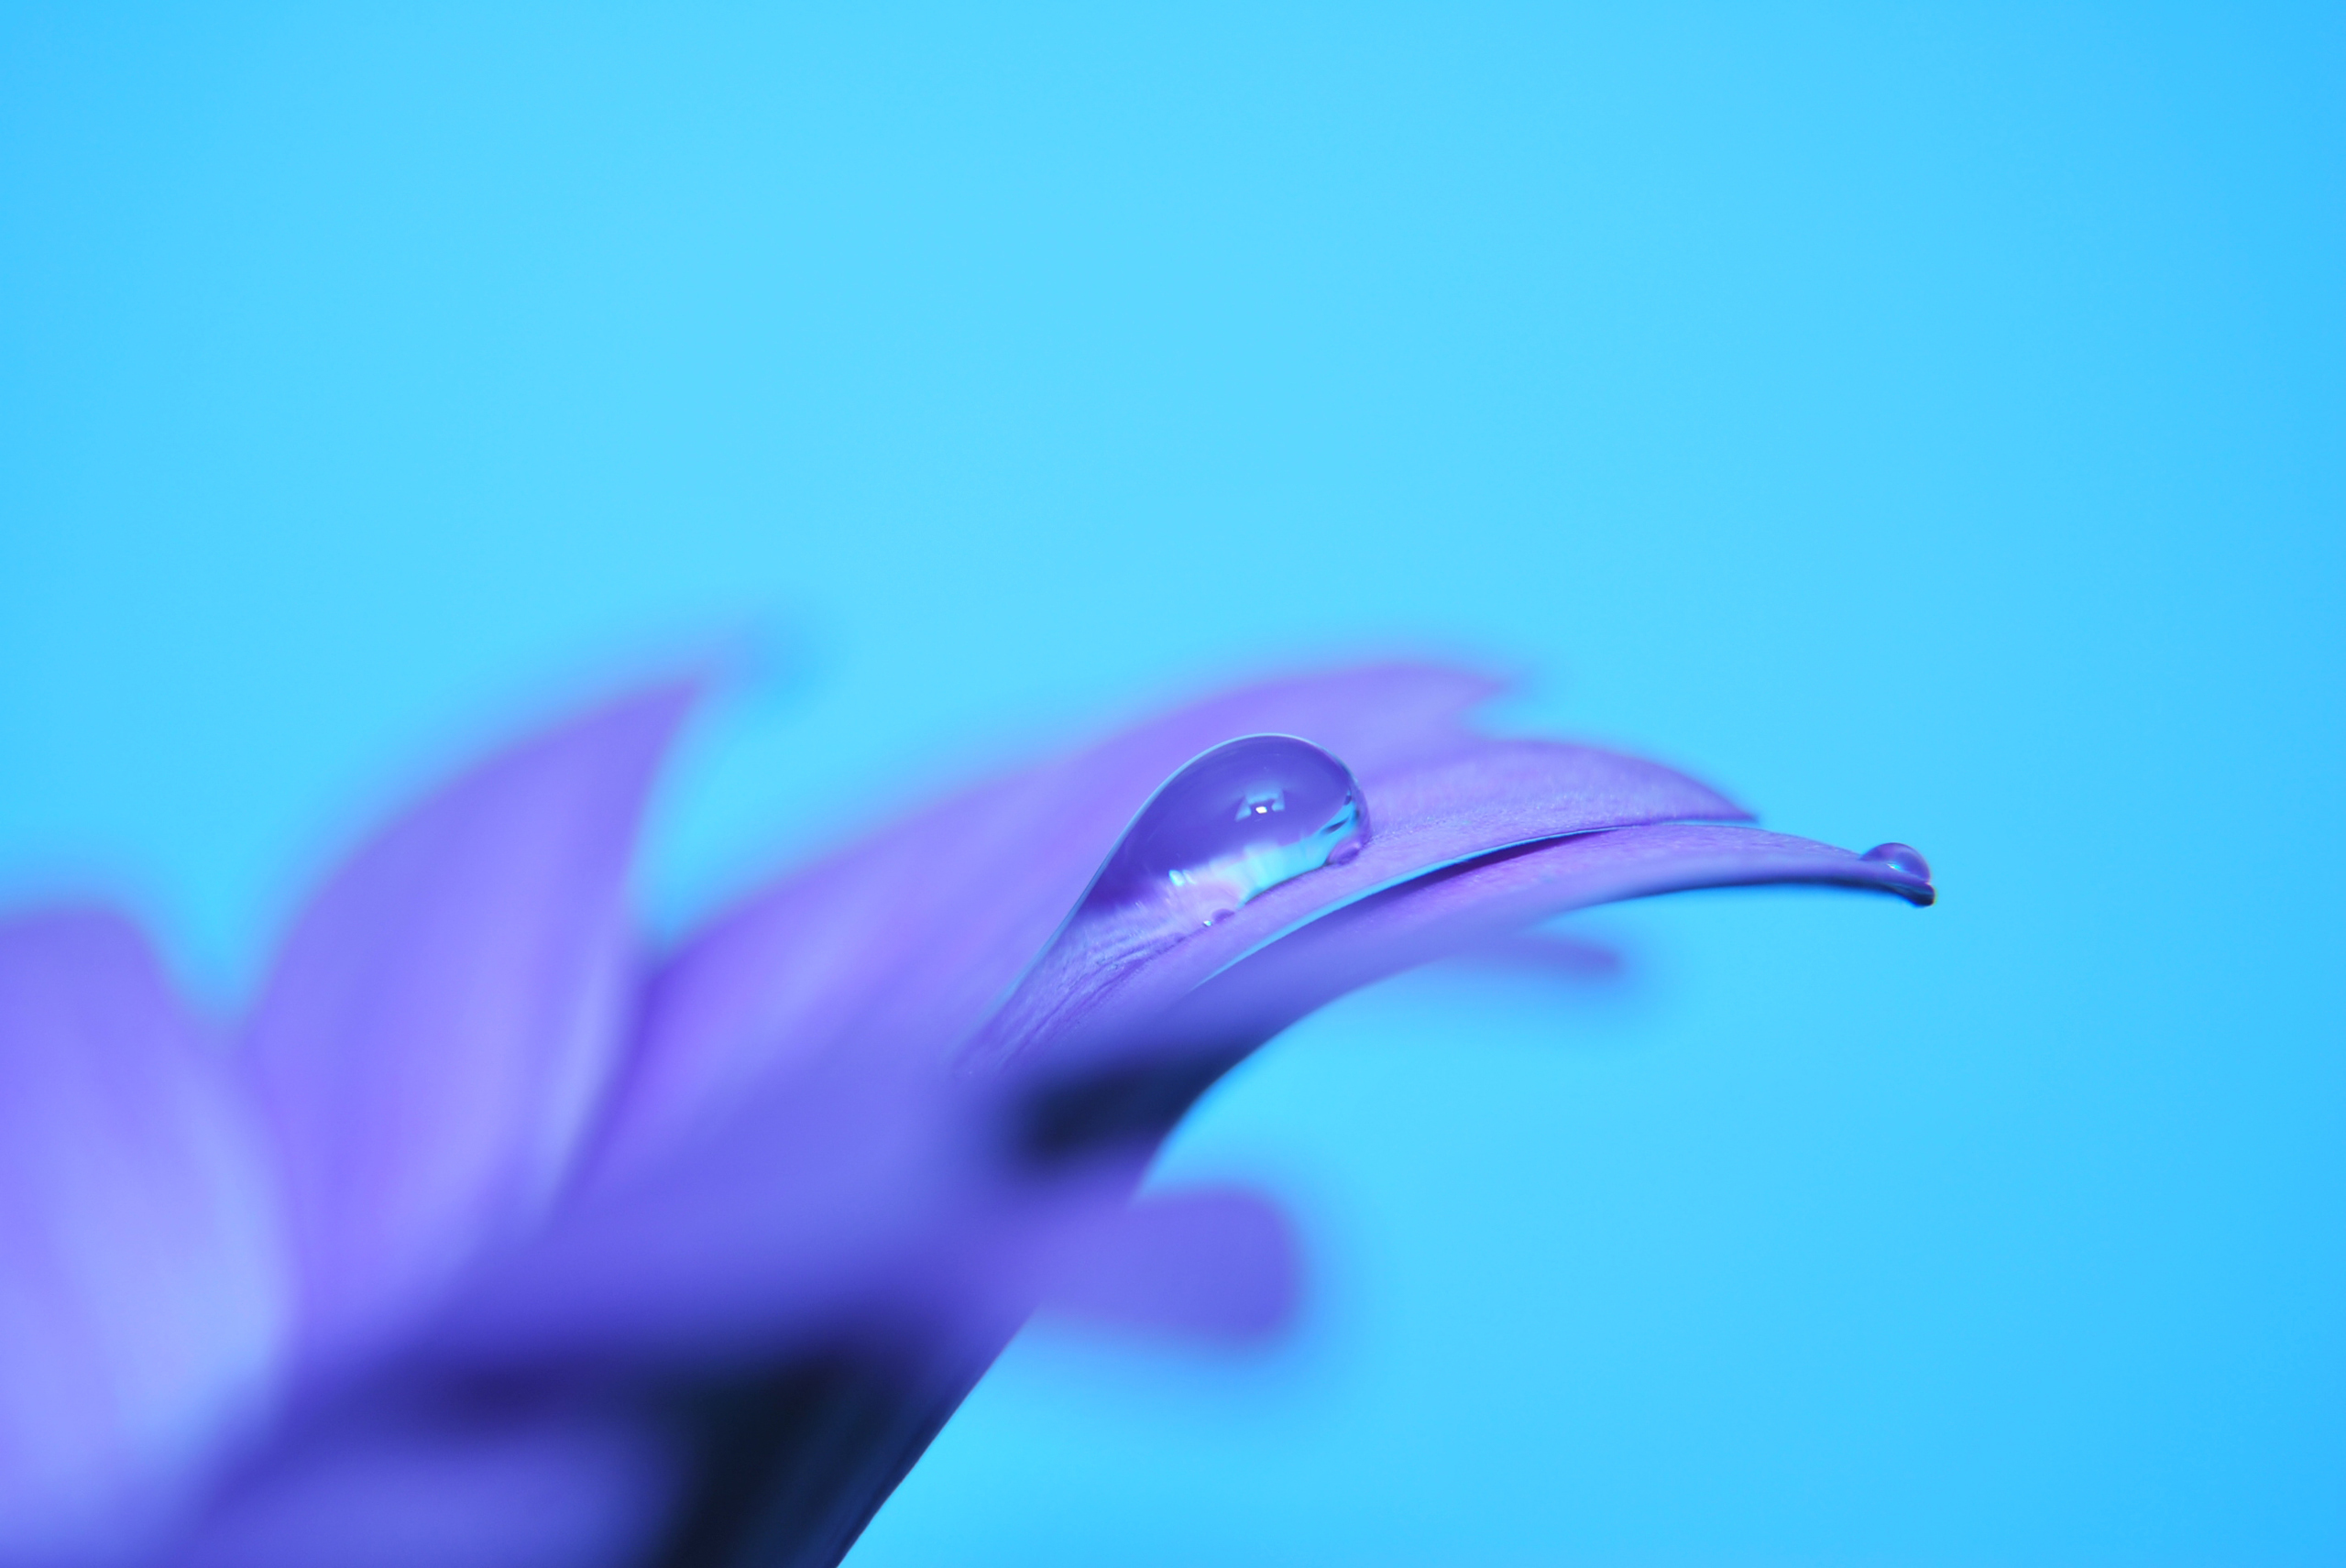 Image: Flower, lilac, purple, drop, blue background